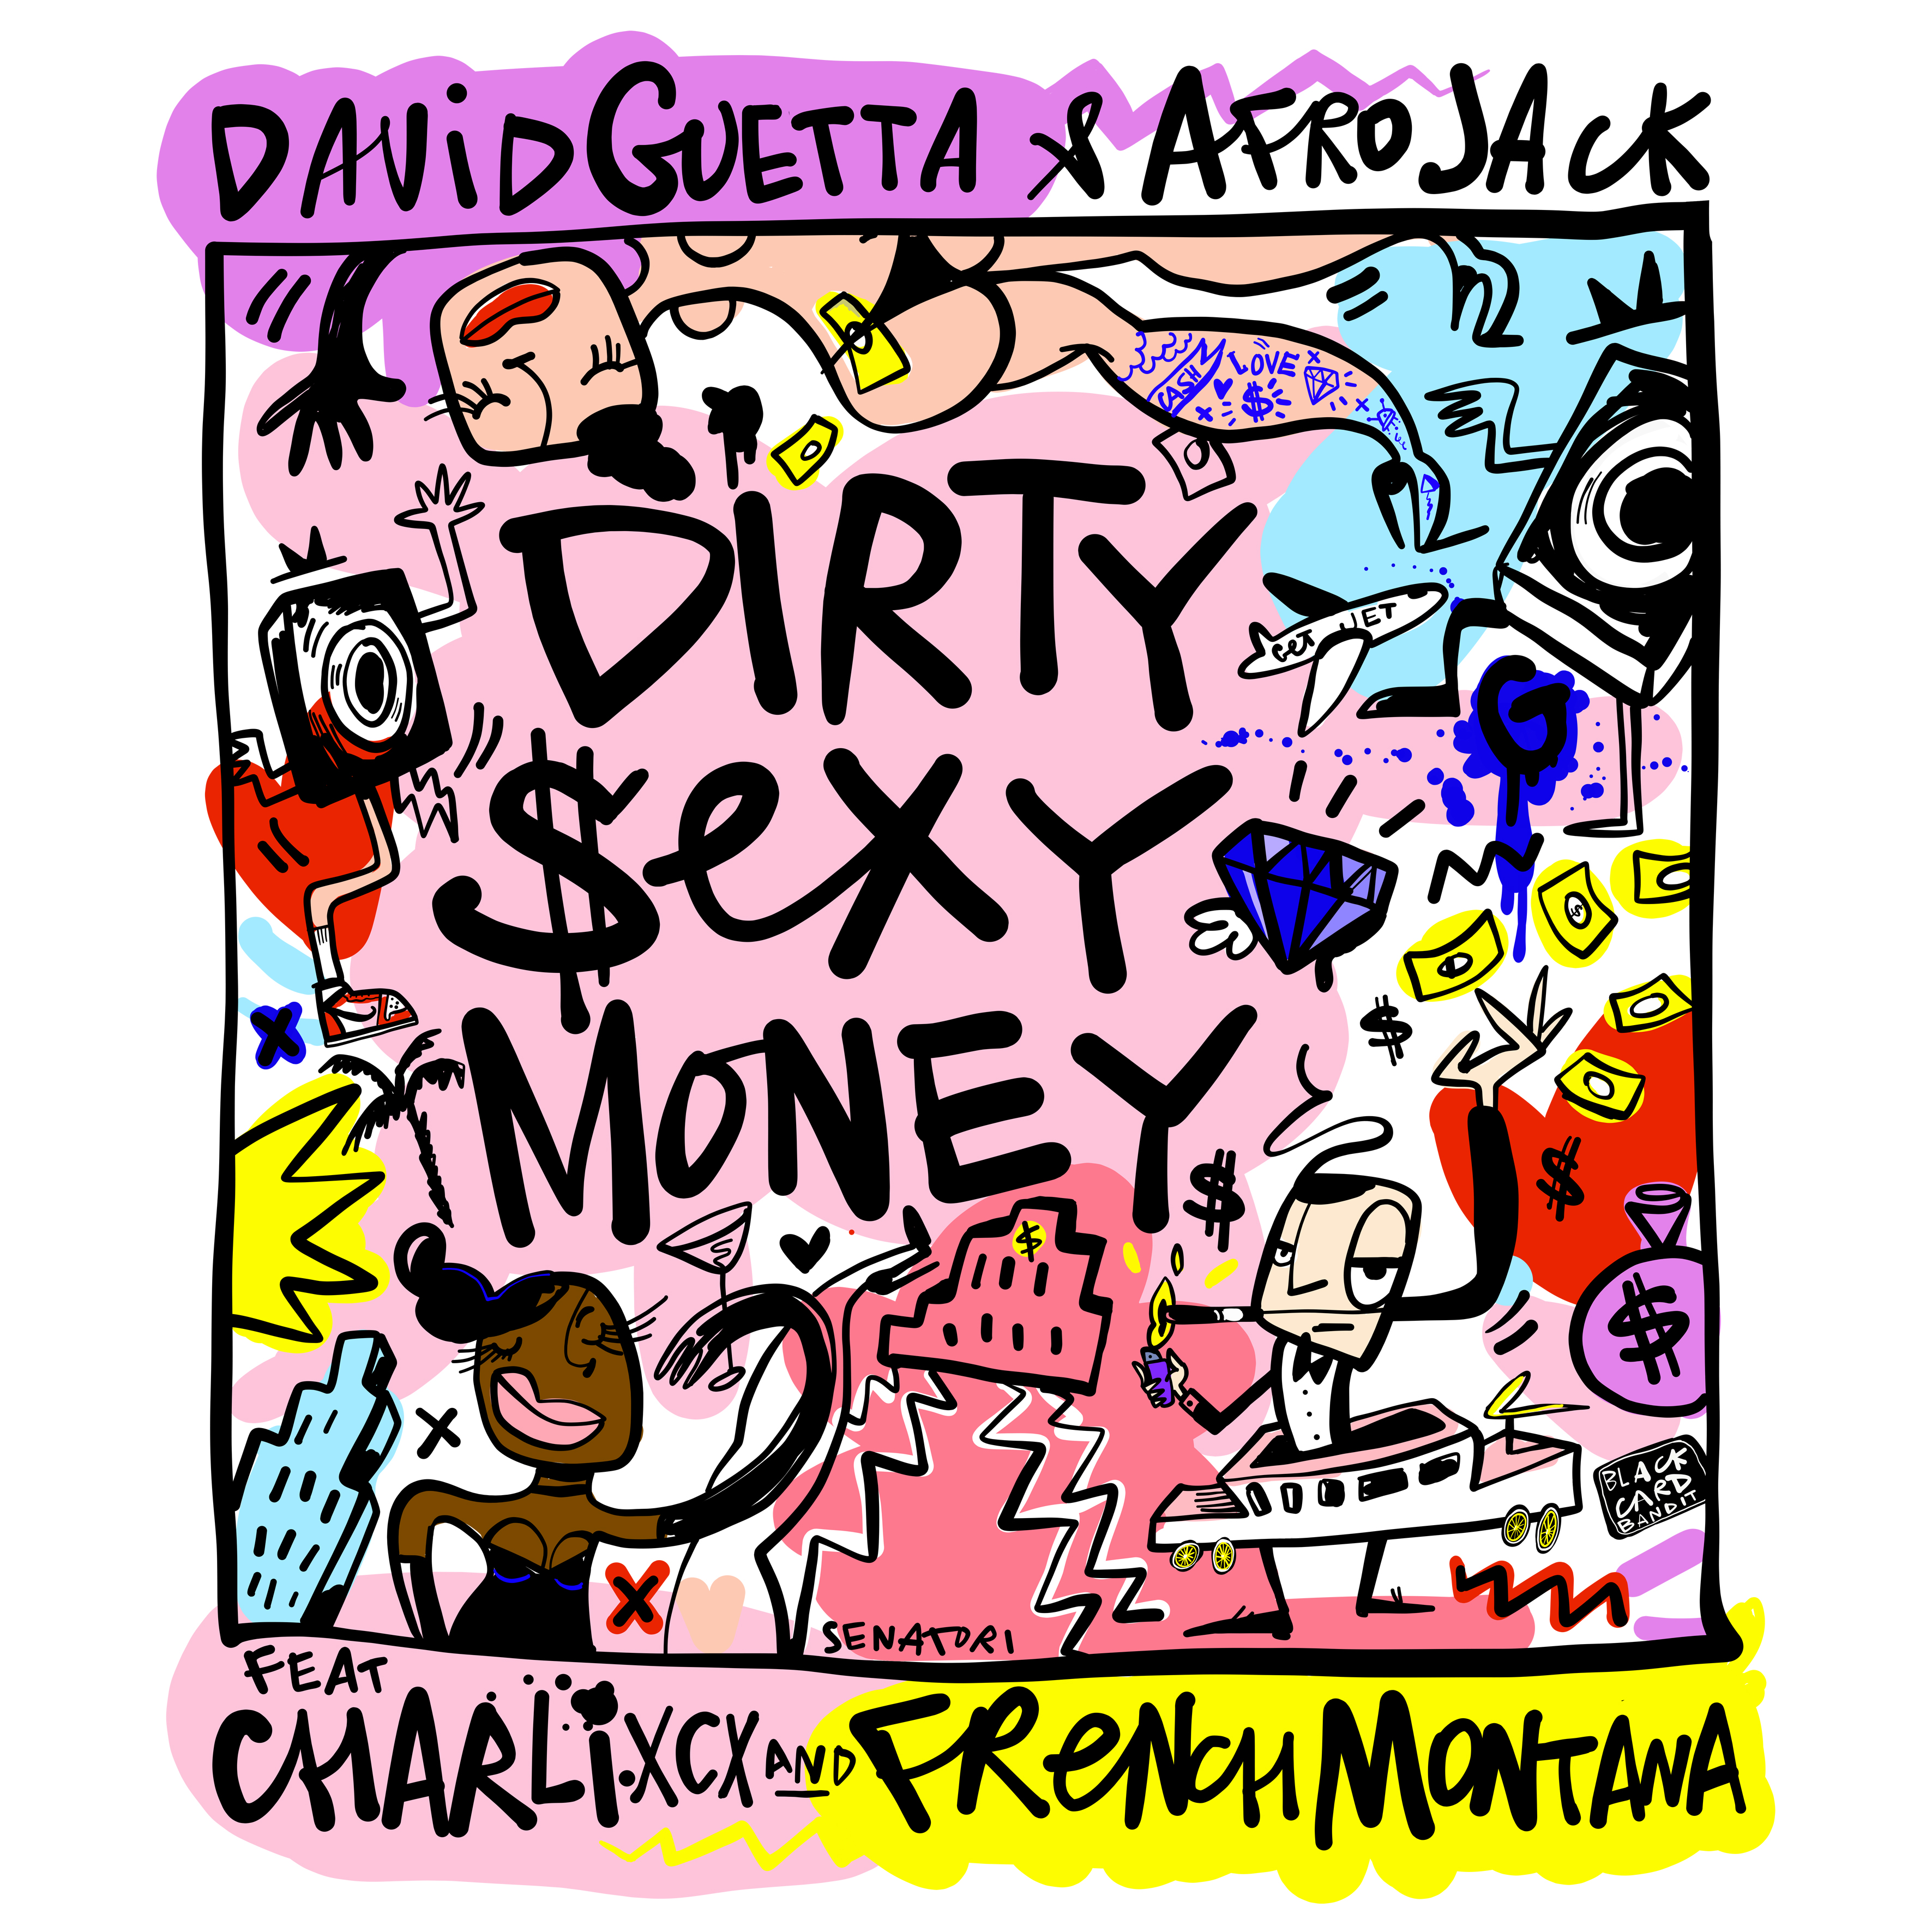 NEW SINGLE by David Guetta & Afrojack ft. Charli XCX & French Montana